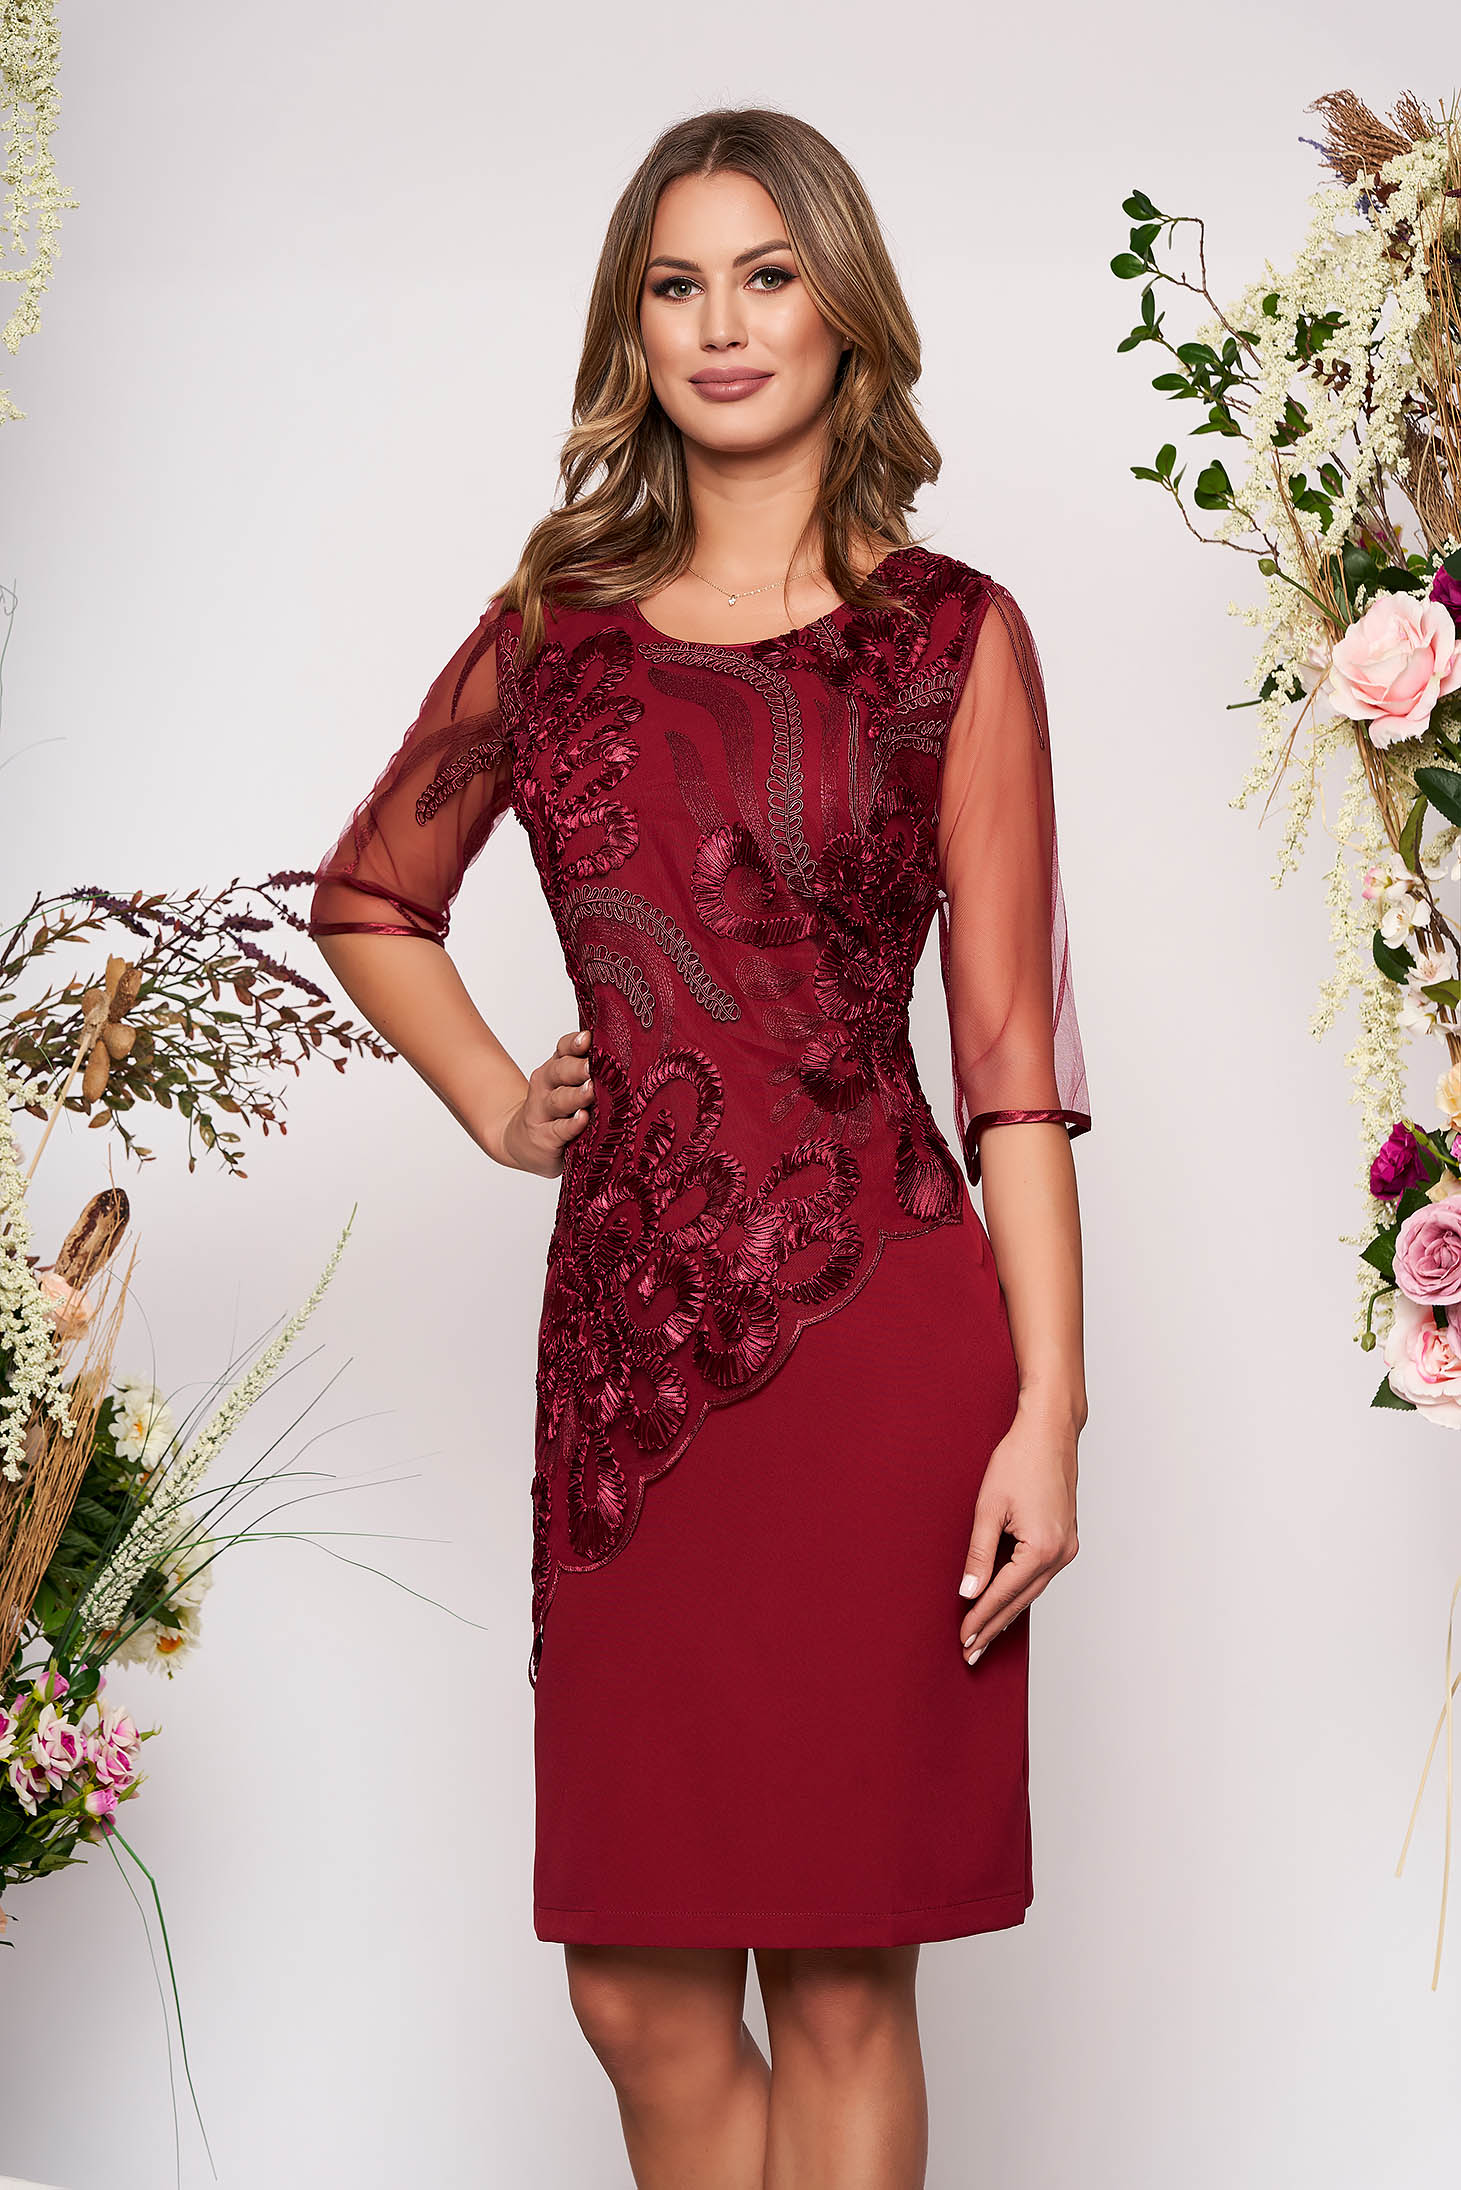 maroon burgundy dress